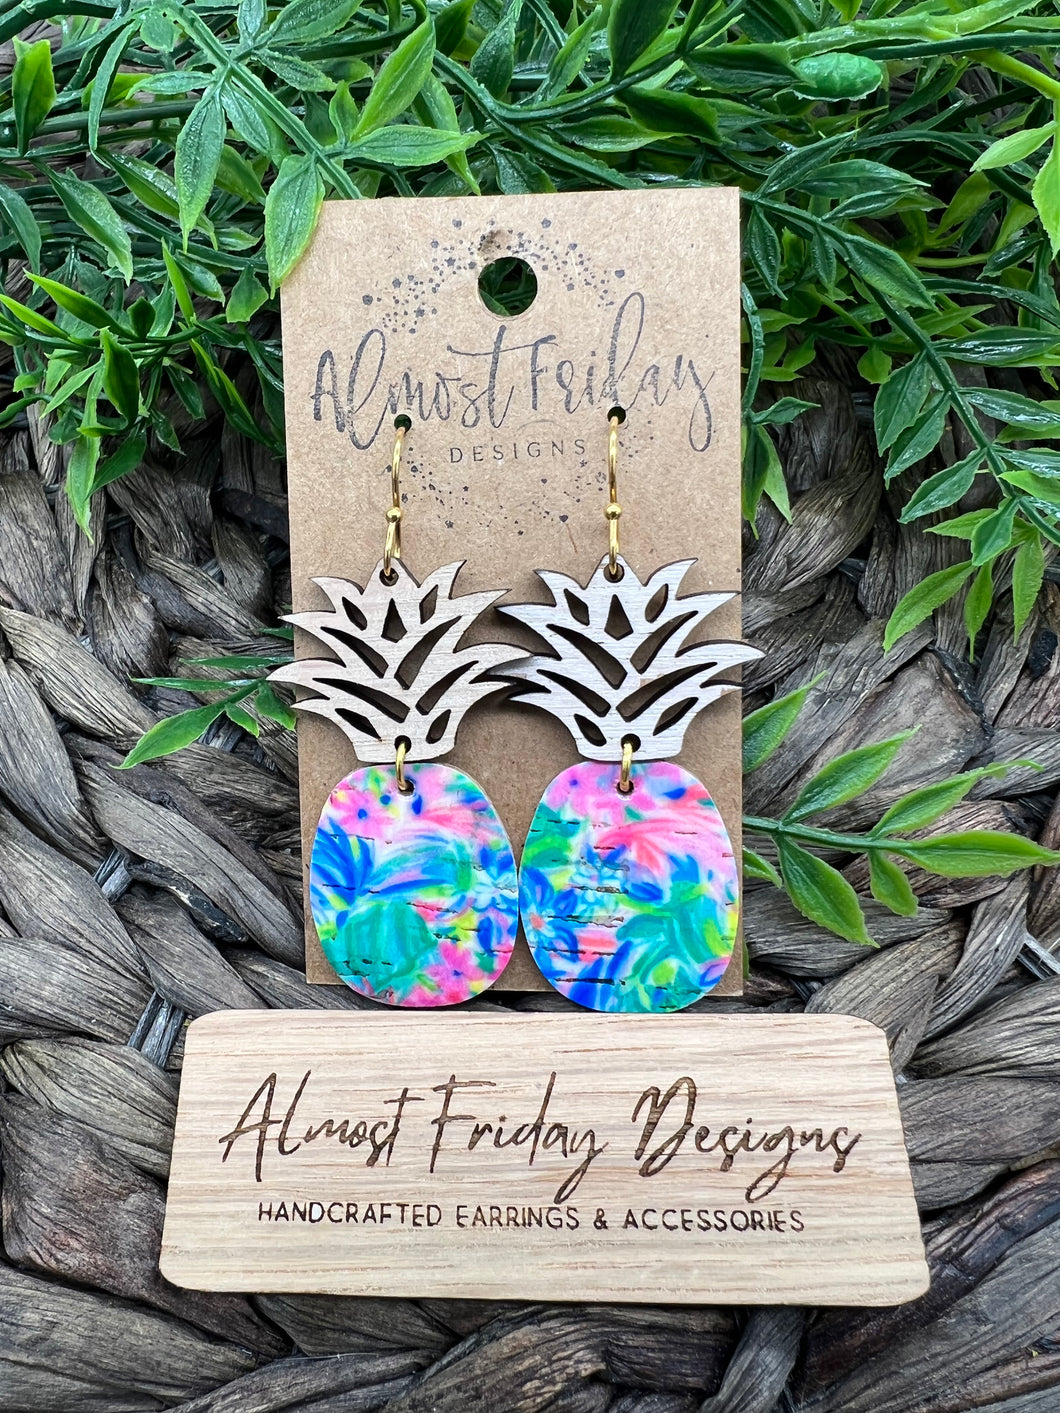 Genuine Leather Earrings - Wood Earrings - Pineapple Earrings - Pink - Green - Blue - Tropical - Flowers - Floral Design - Textured Leather - Summer Earrings - Statement Earrings